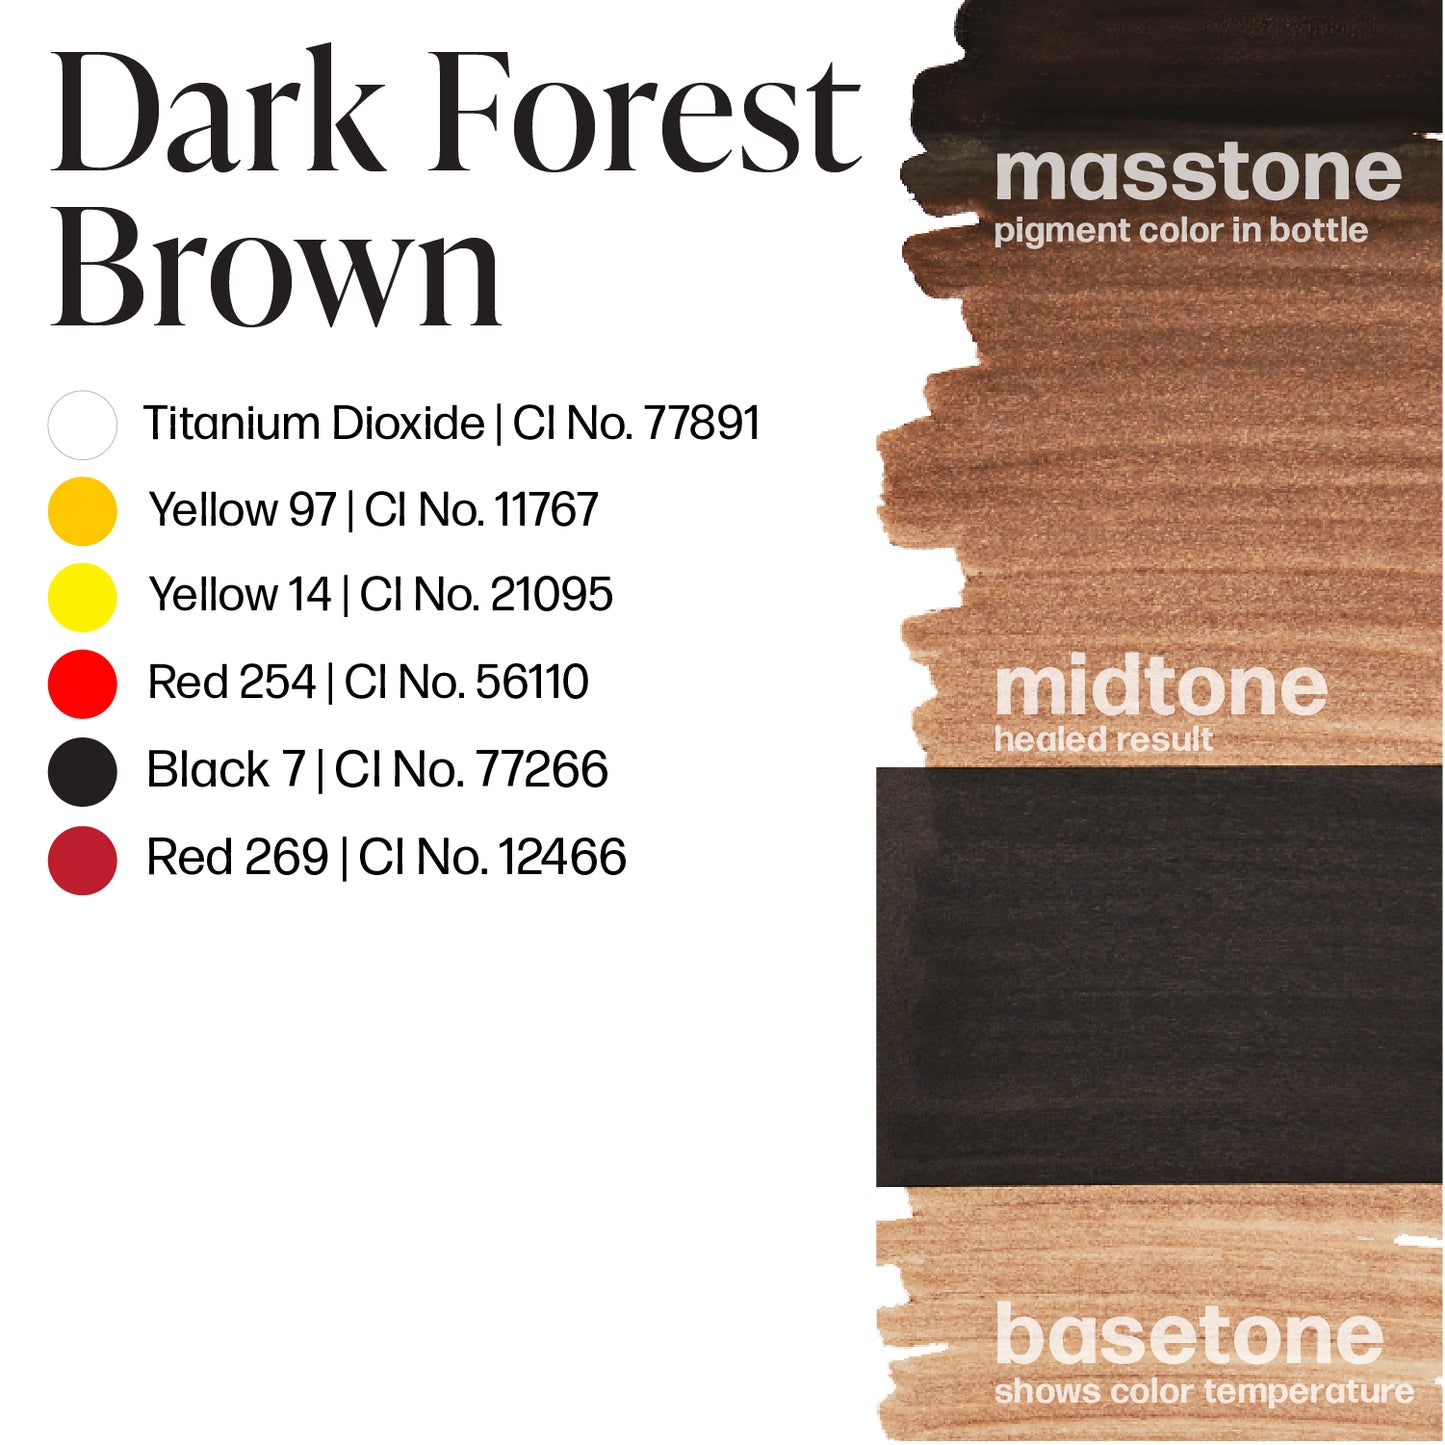 Dark Forest Brown — Perma Blend — Pick Size